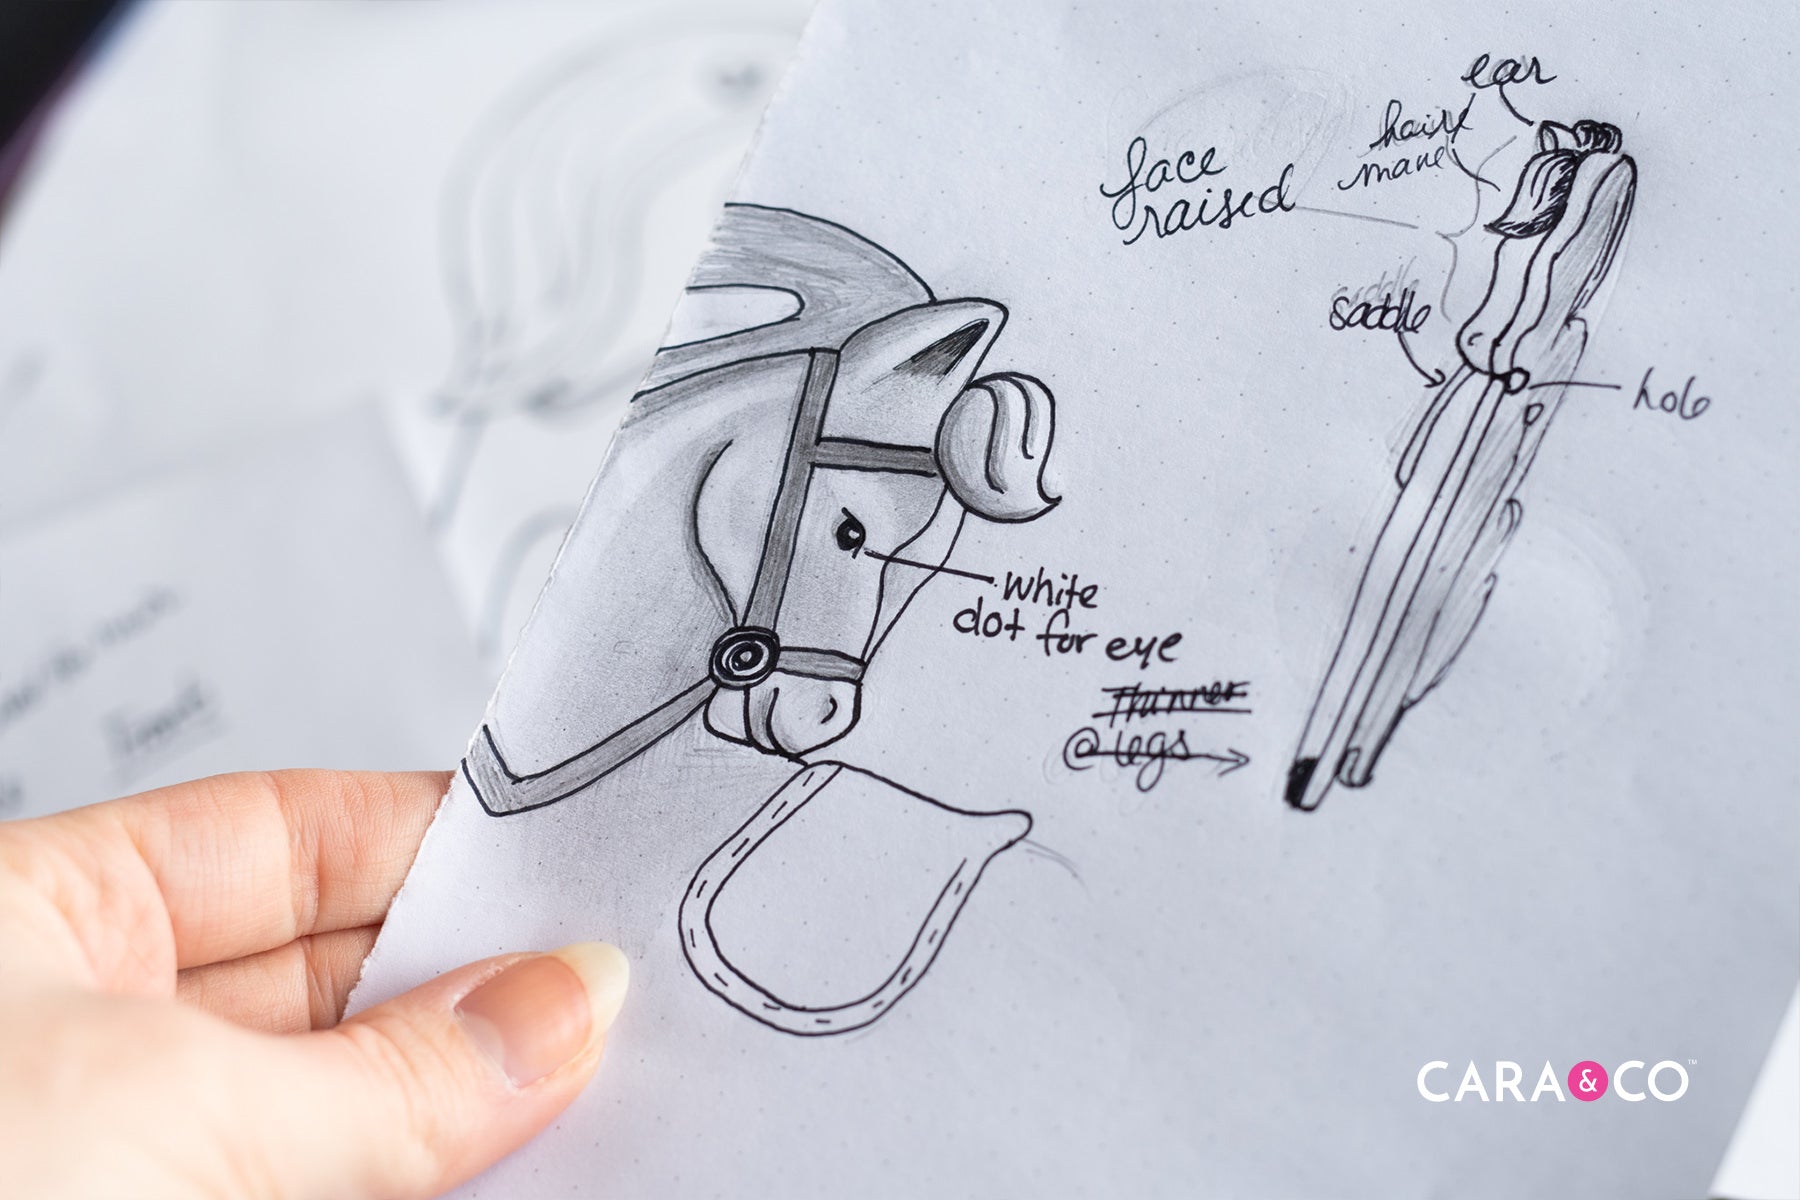 Pencil Drawn Exclusive Design - Cara & Co